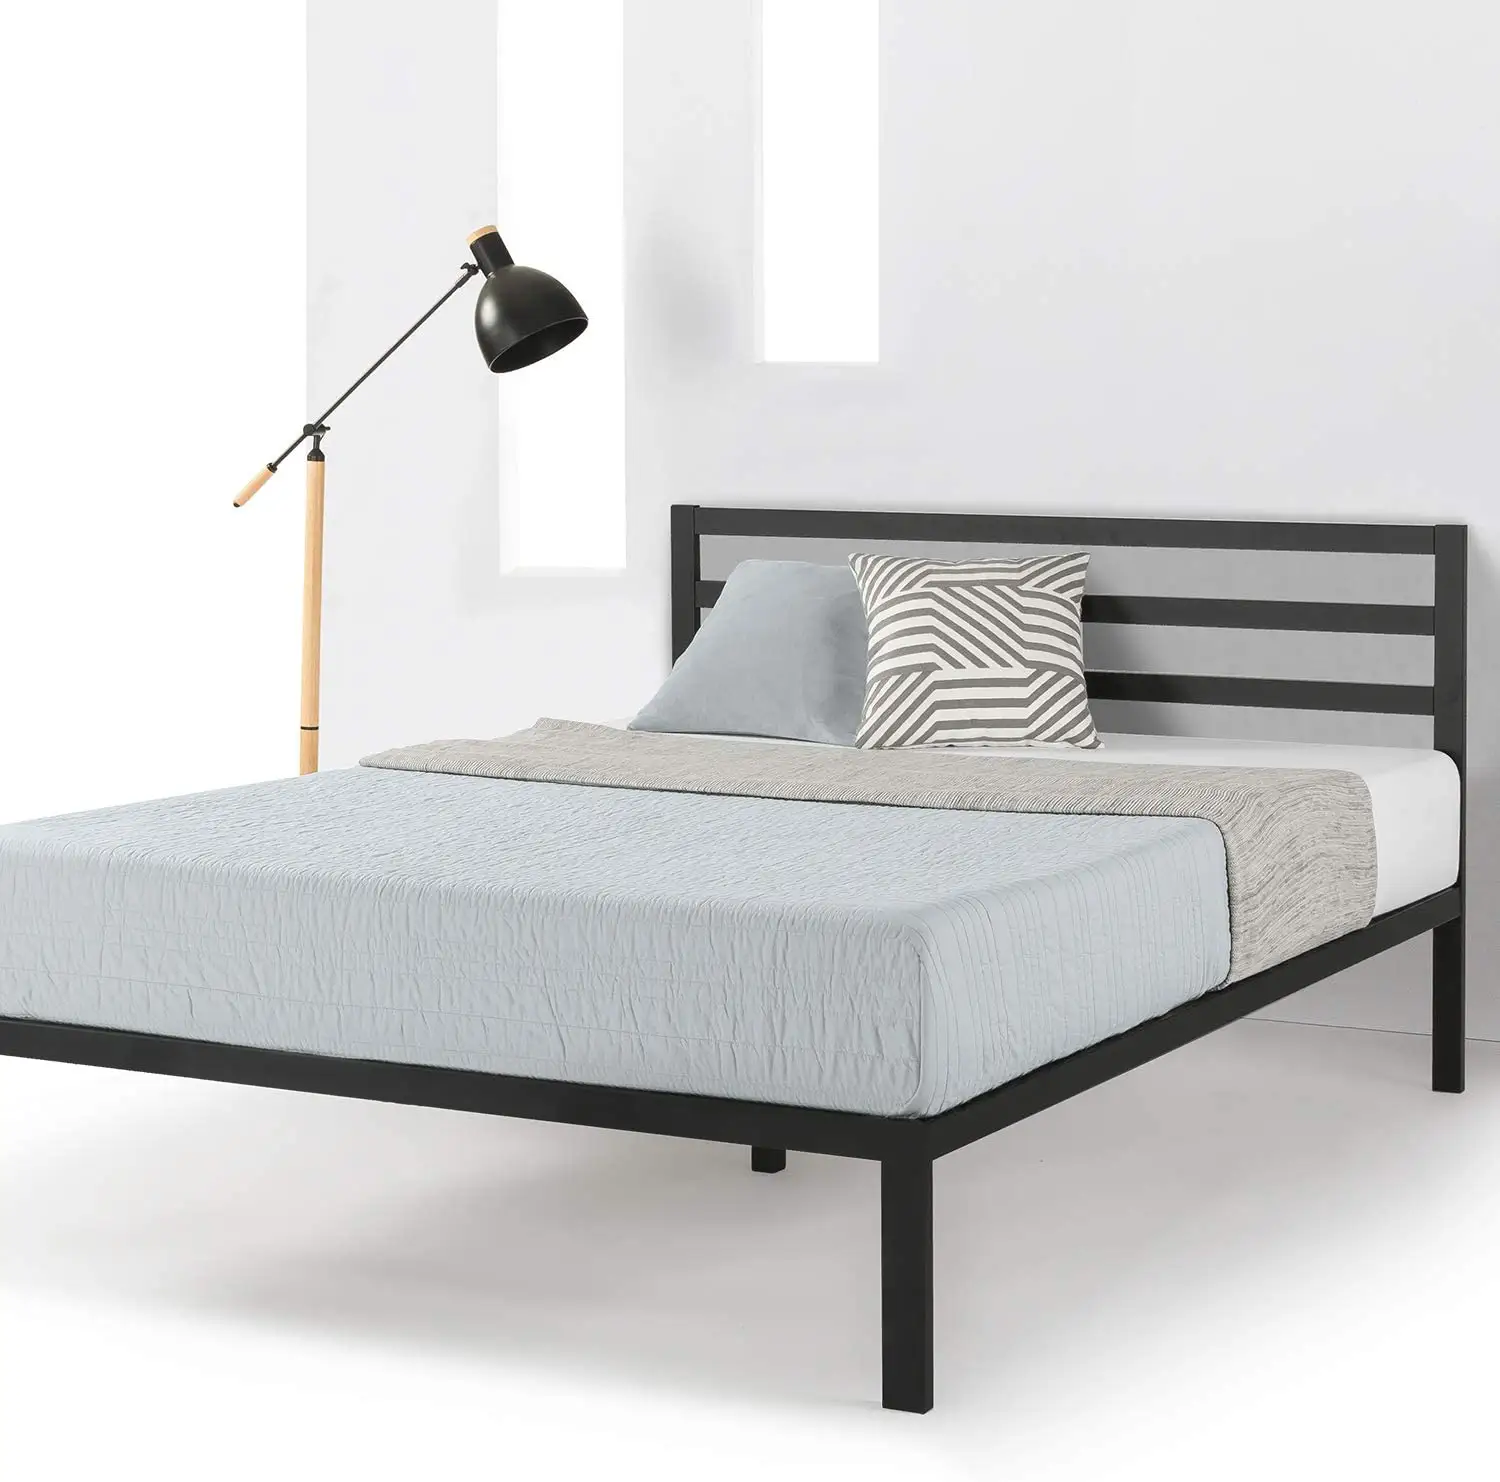 Mellow 14 pollici Heavy Duty Metal Platform Bed Frame Queen Logo in ferro battuto Modern Home Bed letto in metallo con cornici nere